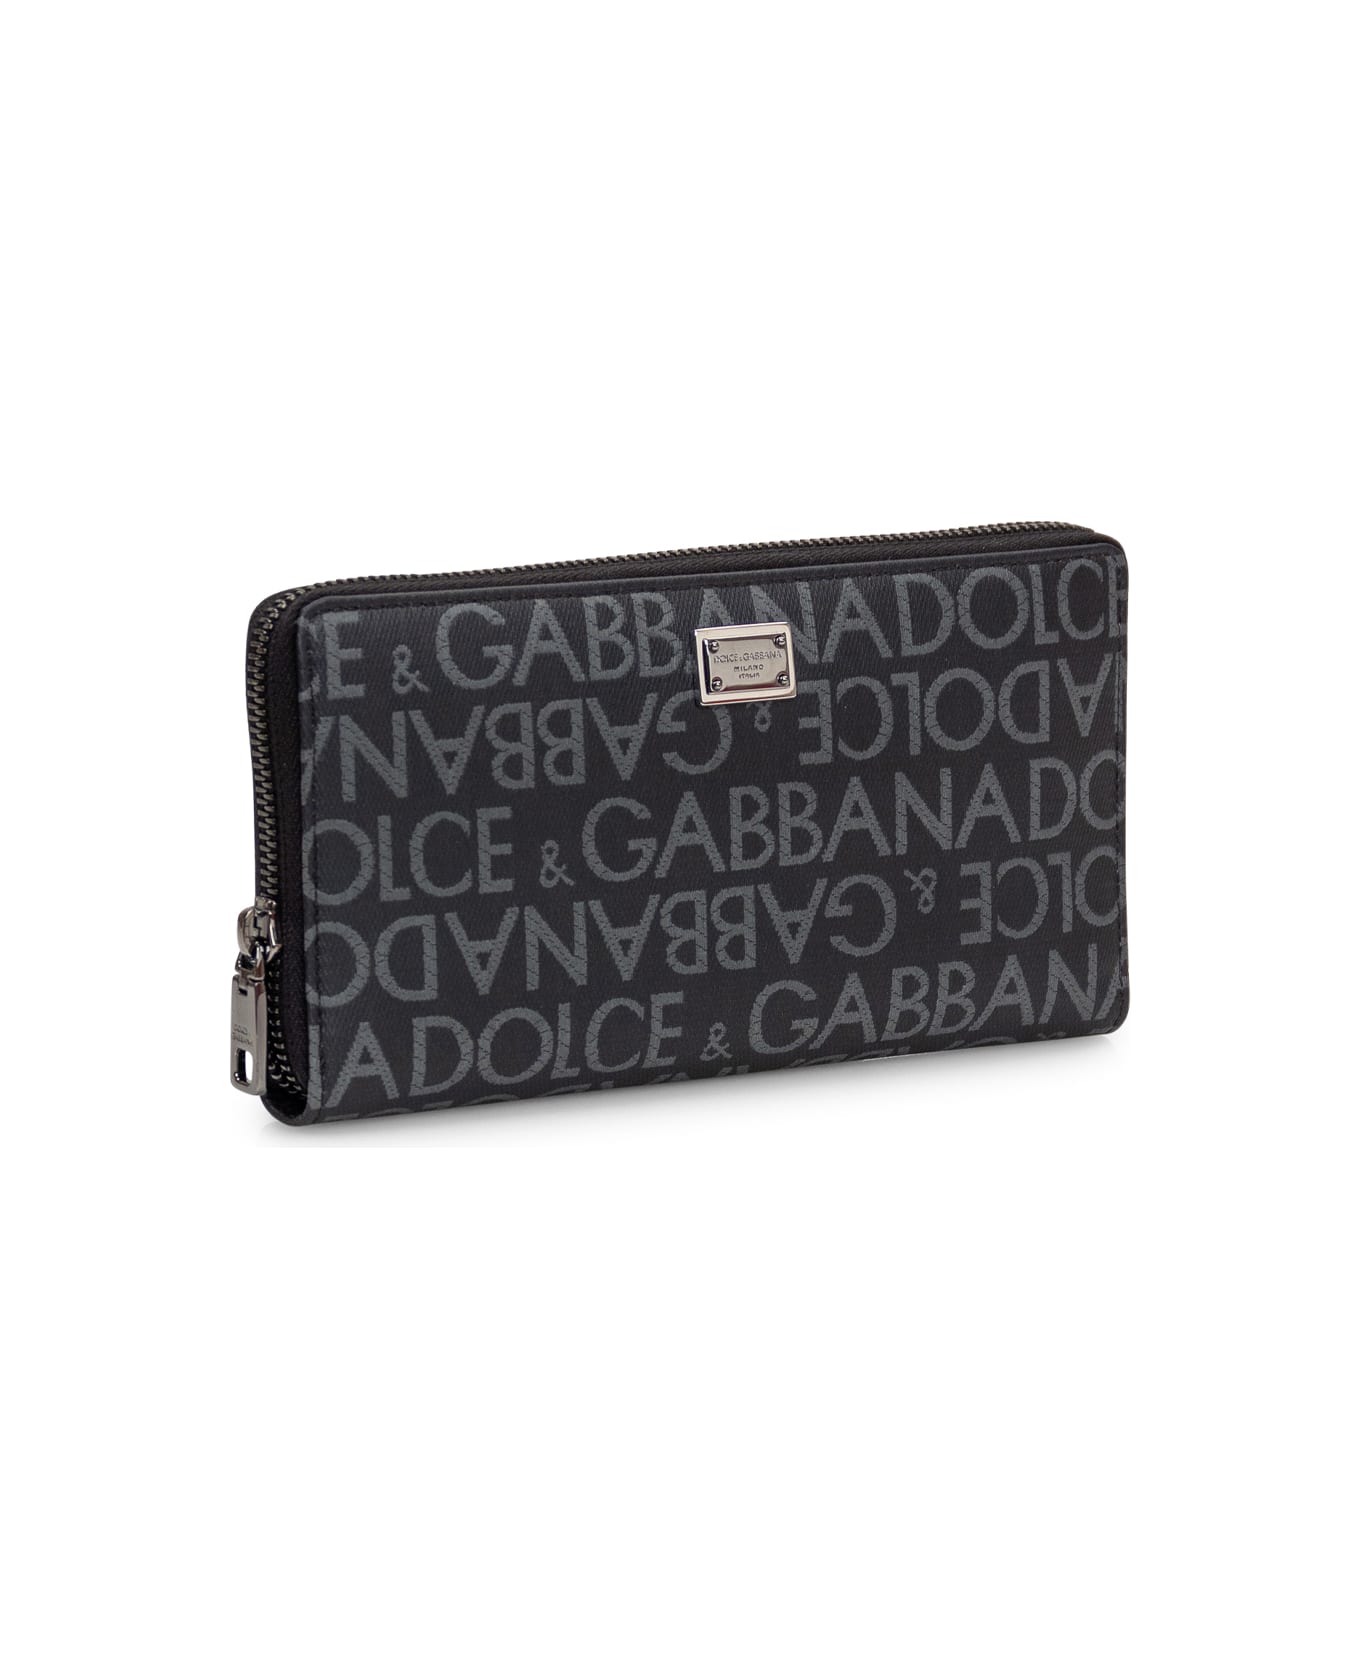 Dolce & Gabbana All-over Monogrammed Wallet - Dolce & Gabbana Pre-Owned flower appliqué dress